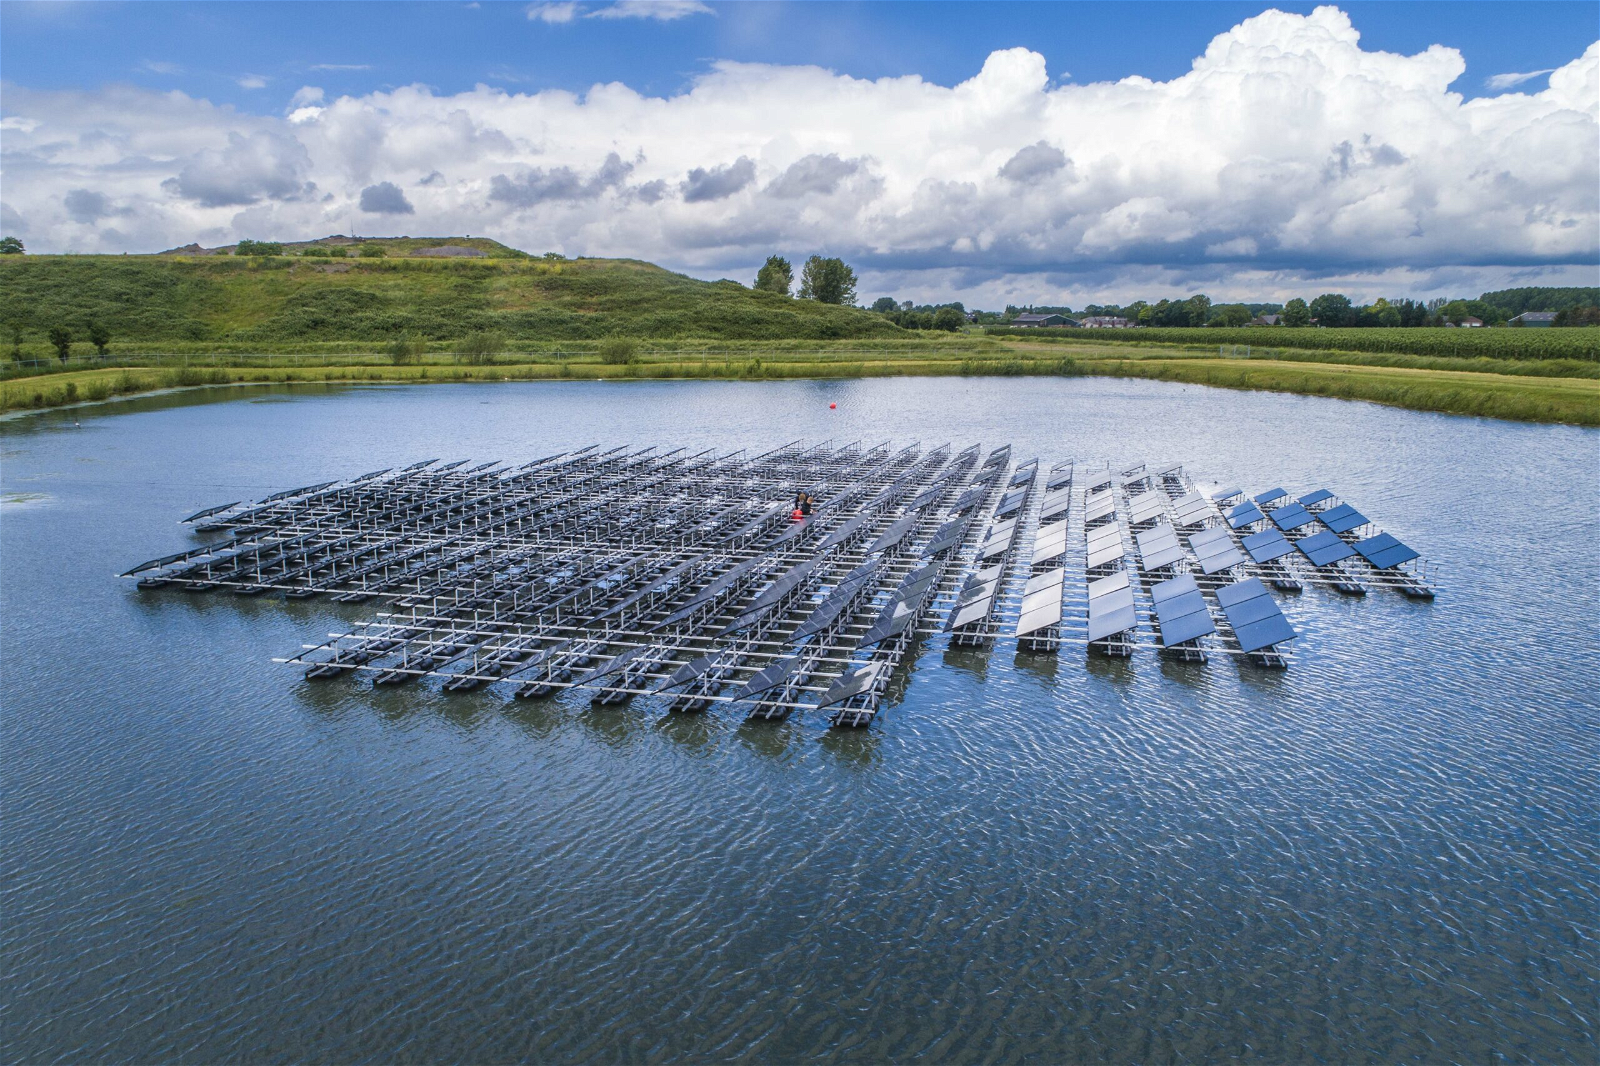 Figure 4: Waterschap Rivierenland’s floating solar project, INNOZOWA, in the Netherlands